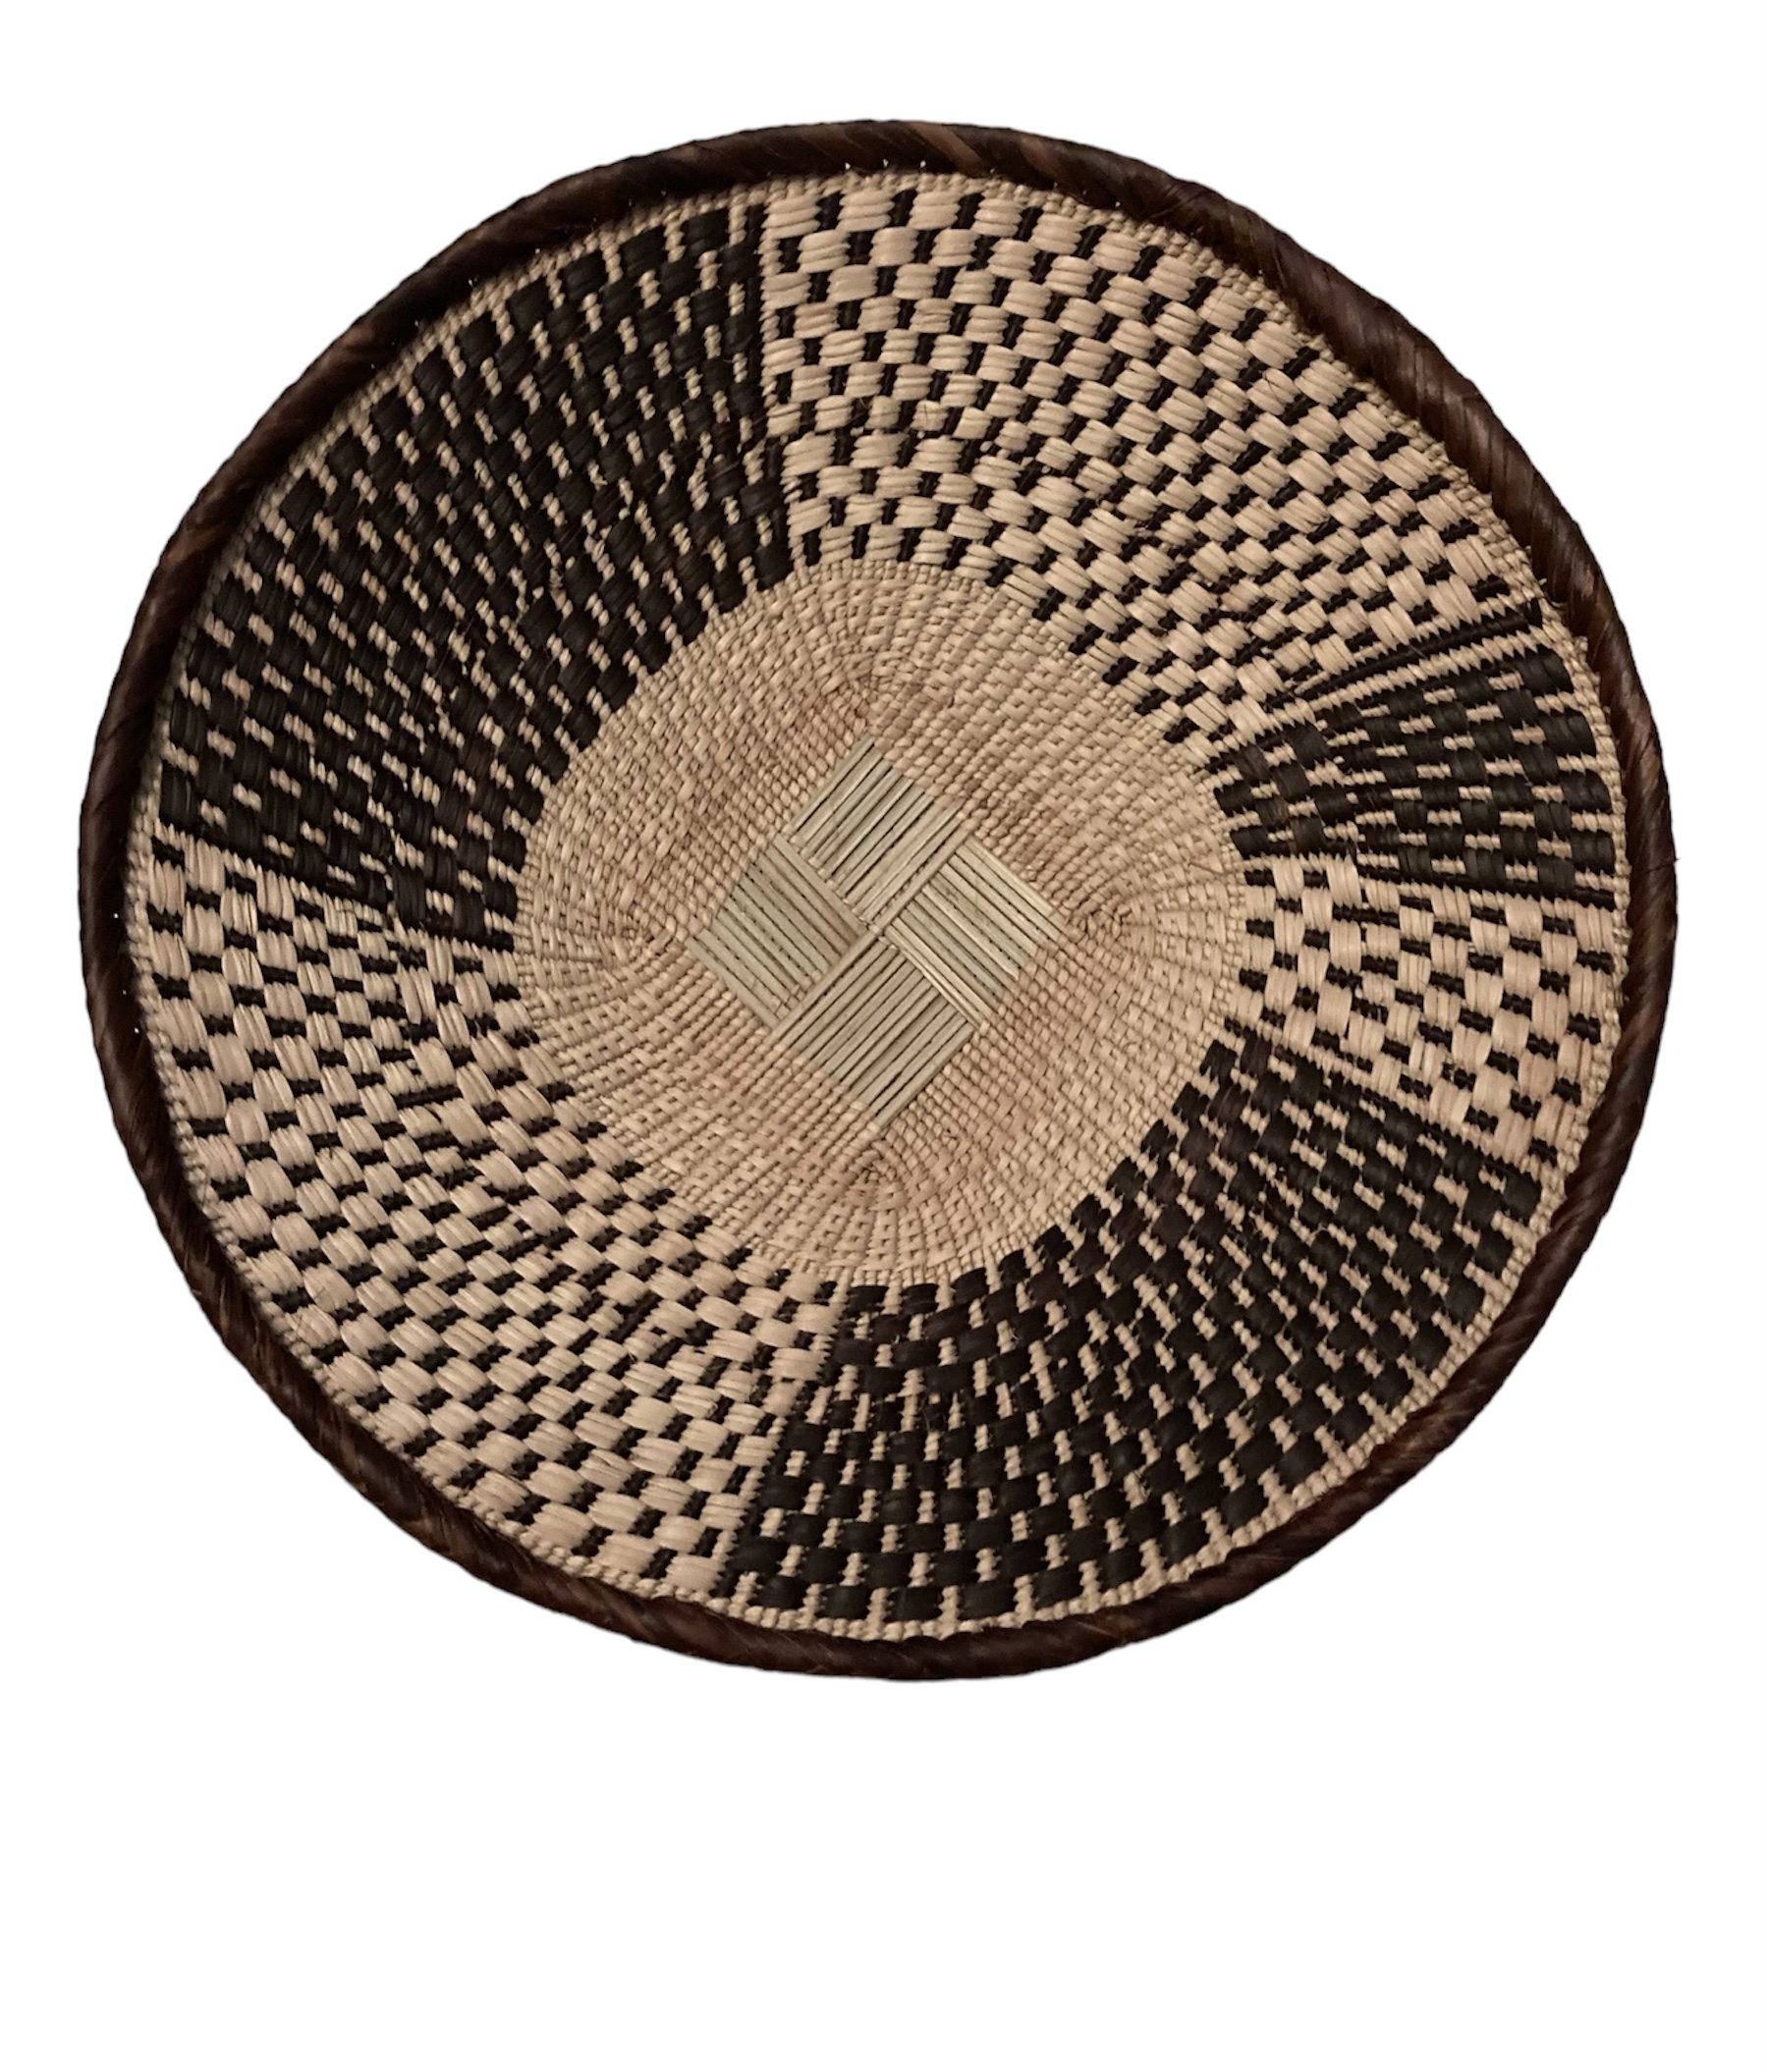 Tonga Basket from Zimbabwe - Design #001 - 14" dia.